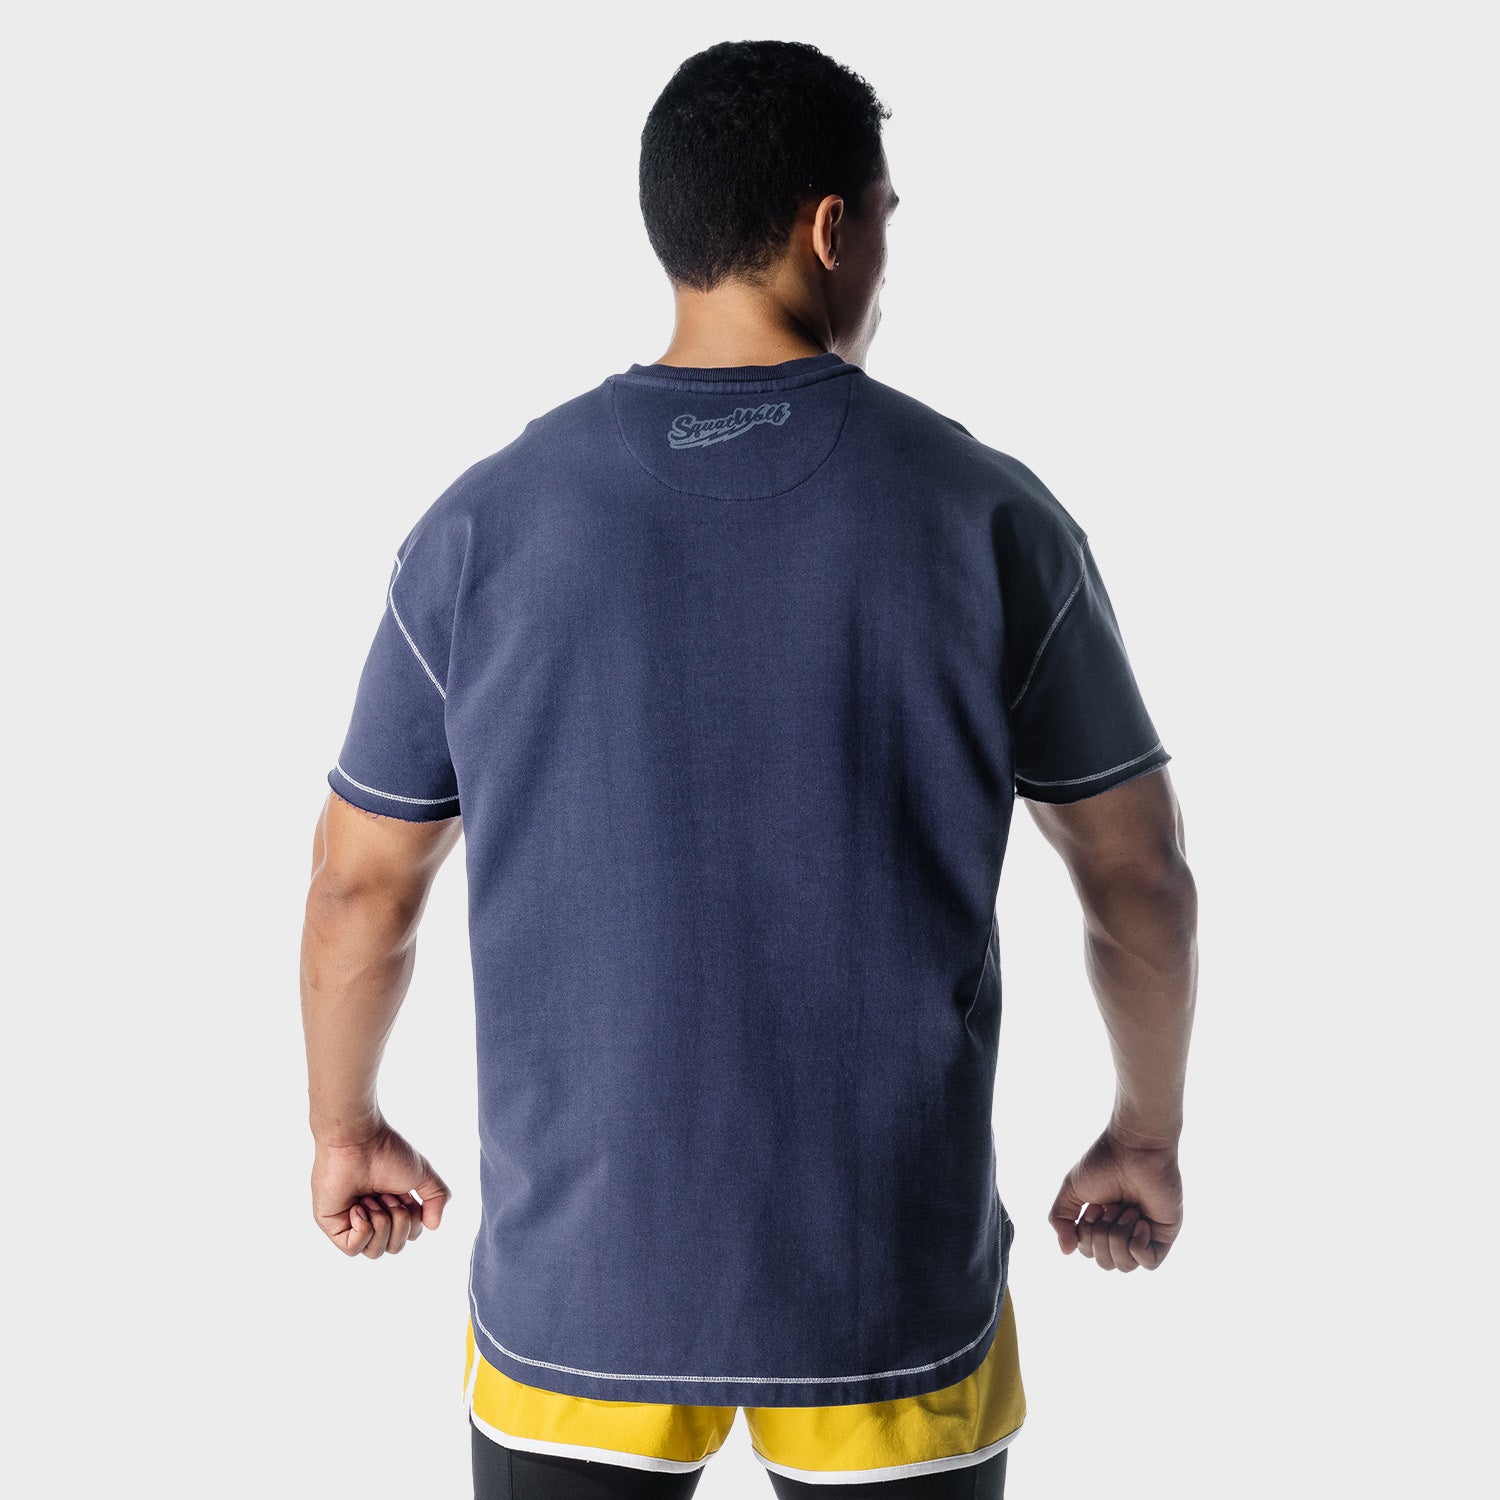 squatwolf-gym-t-shirts-golden-era-oversized-crew-t-shirt-patriot-blue-workout-clothes-for-men